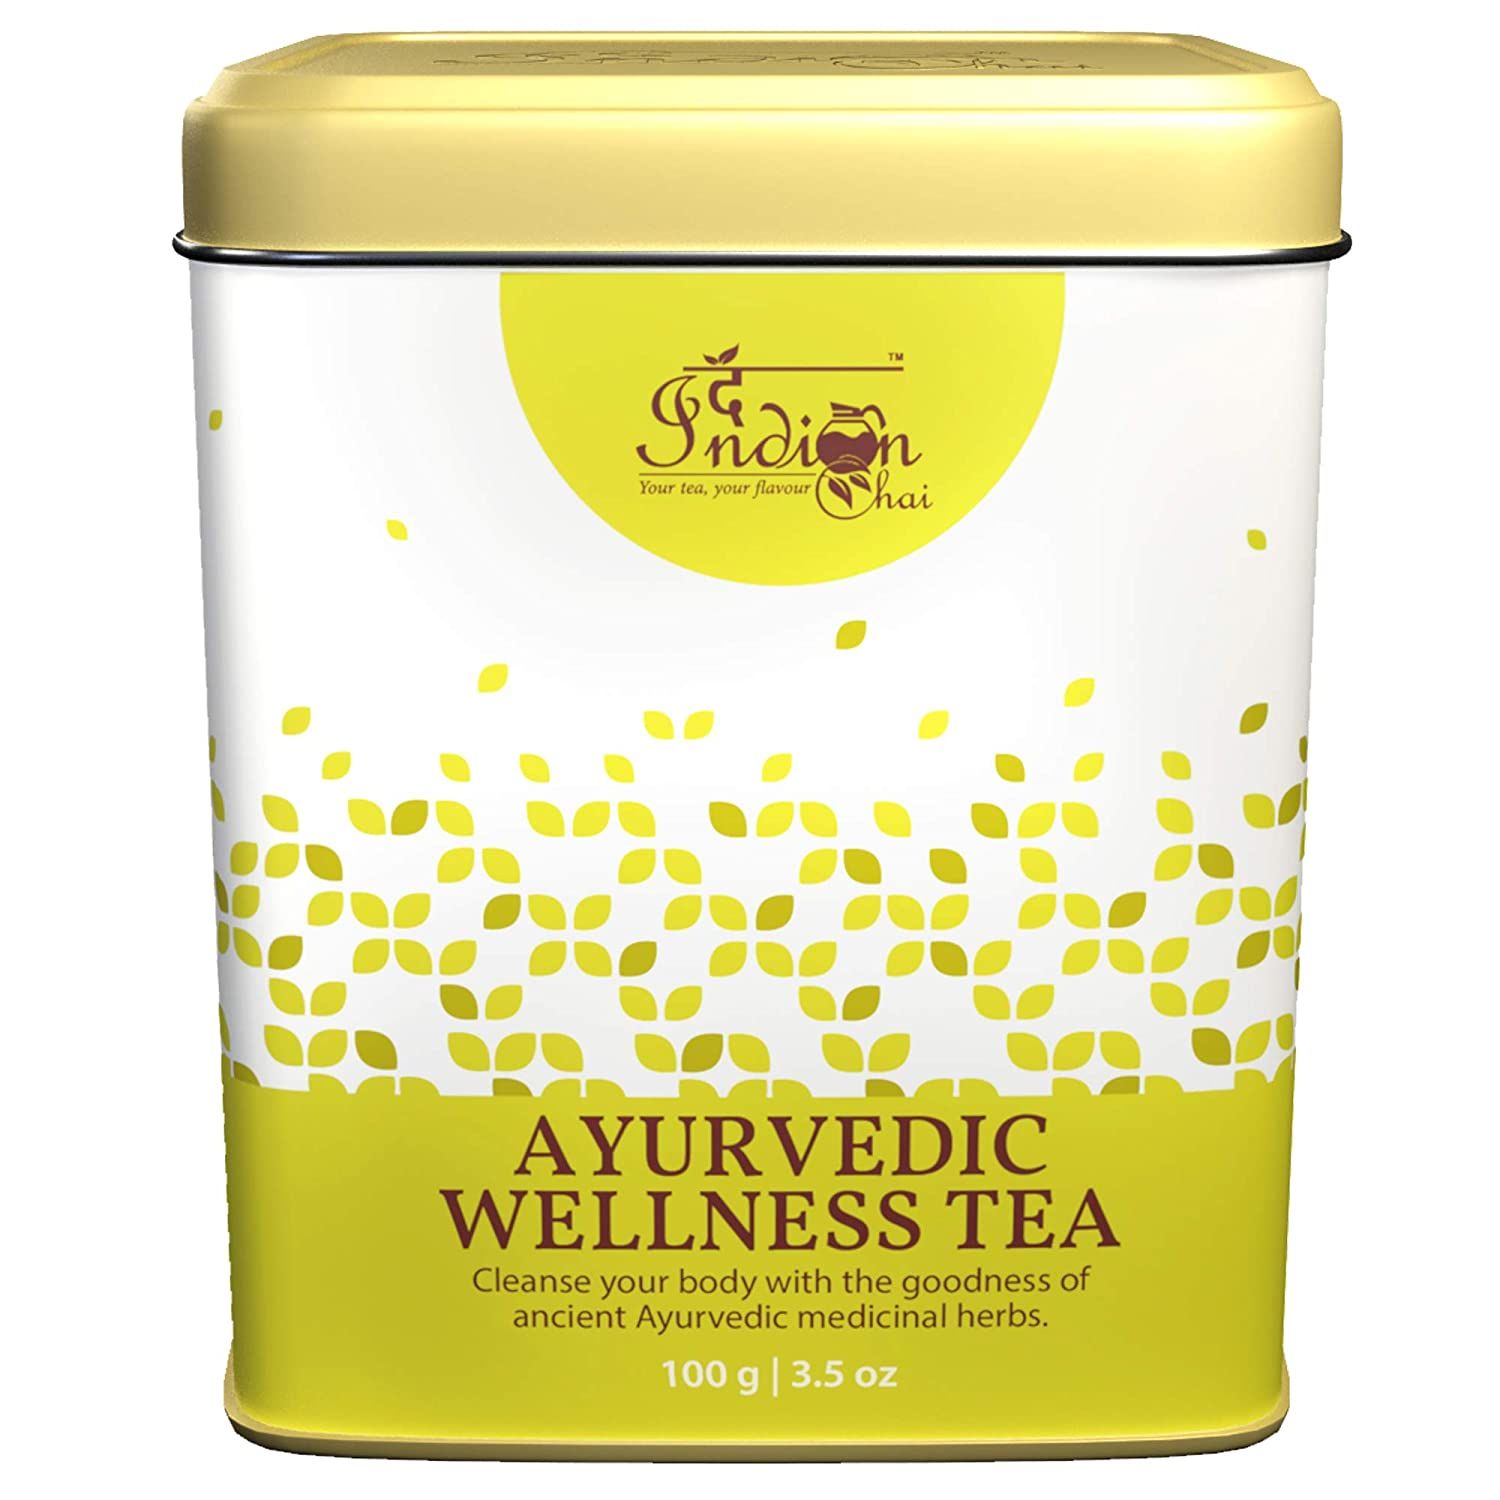 The Indian Chai Ayurvedic Wellness Tea Image